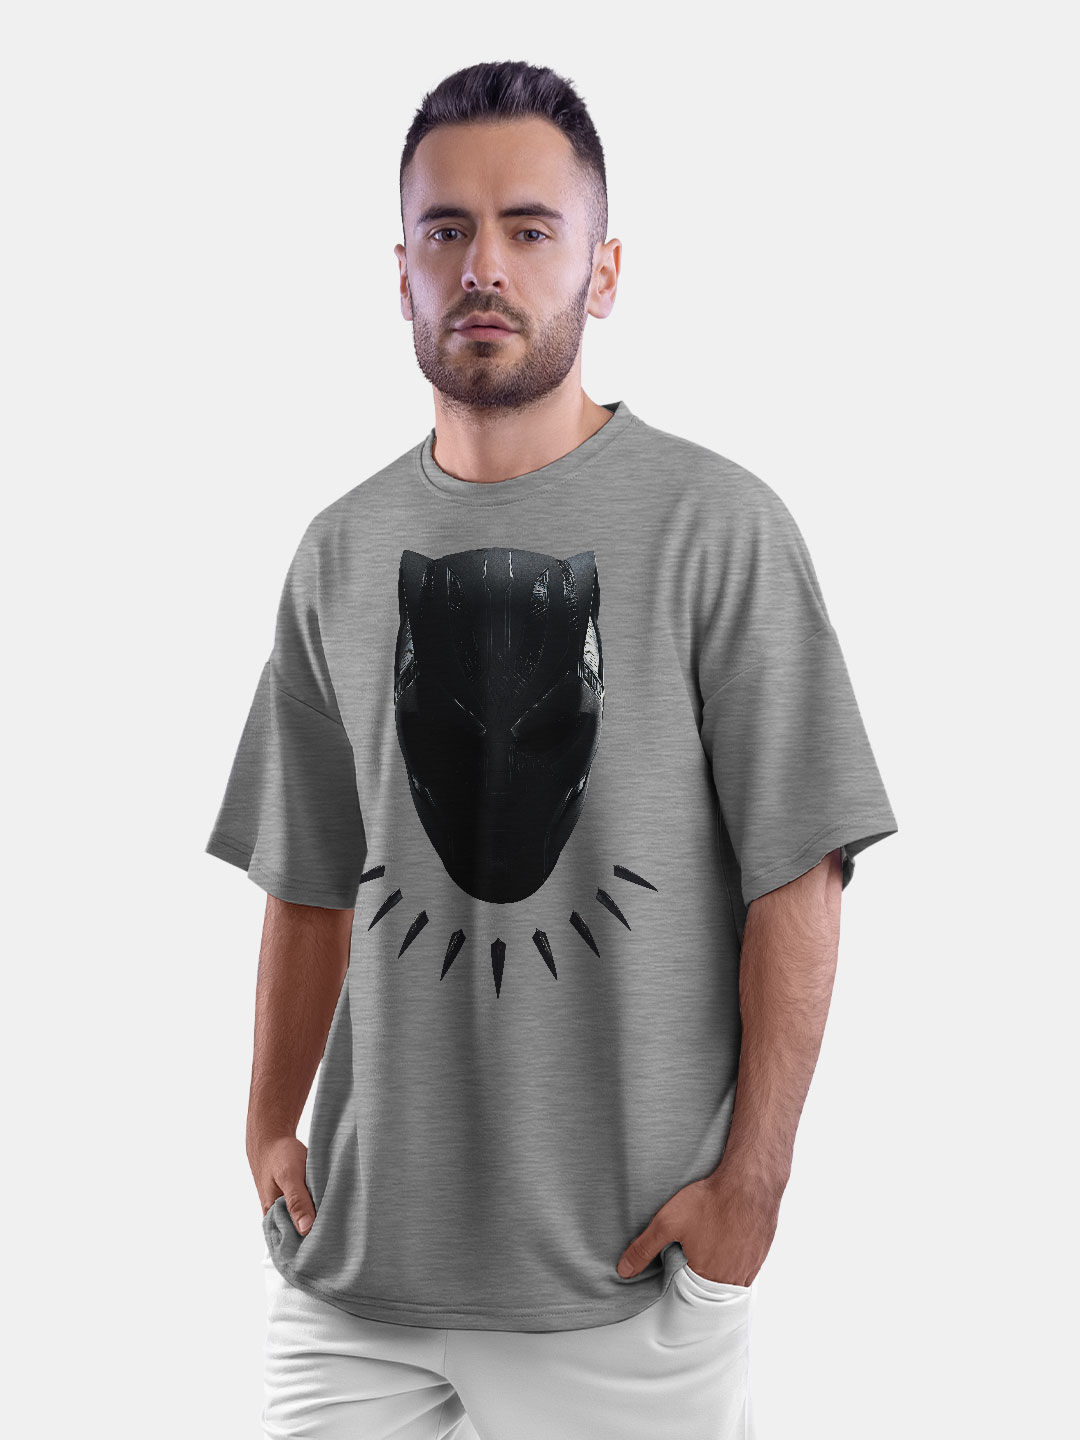 Buy Wakanda Forever Black Panther Grey - Male Oversized T-Shirt T-Shirts Online